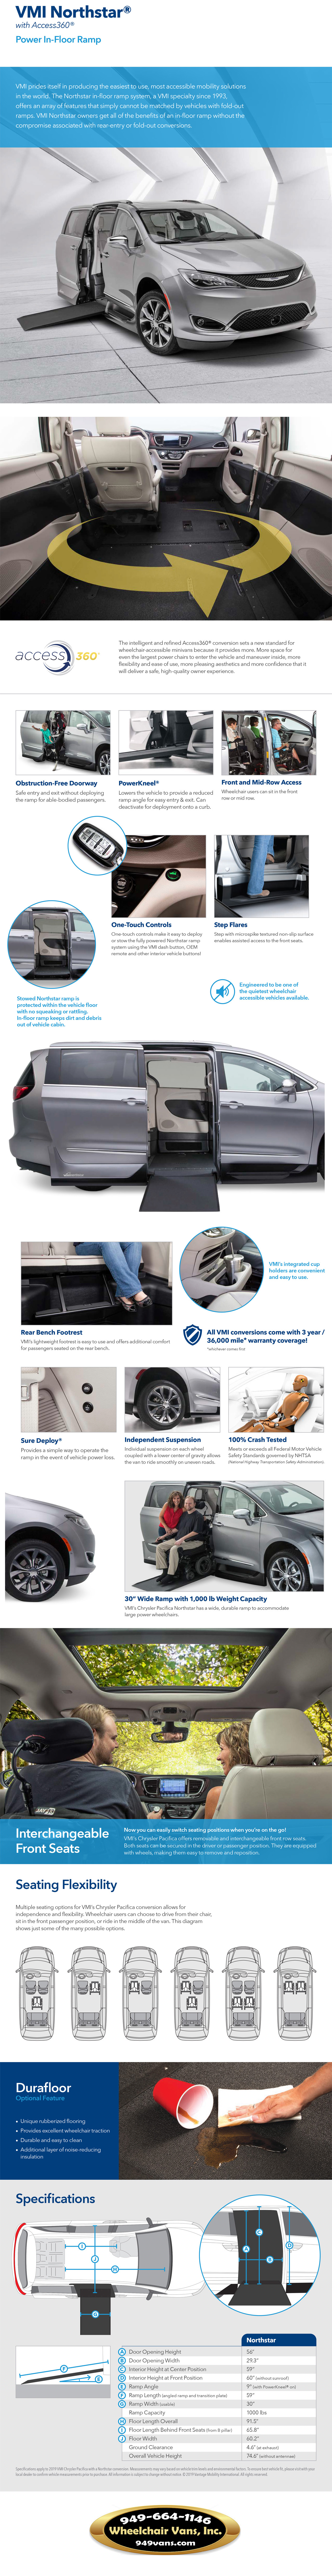 Chrysler Pacifica VMI NorthStar with Access 360 Power Infloor Ramp Wheelchair Van Conversion